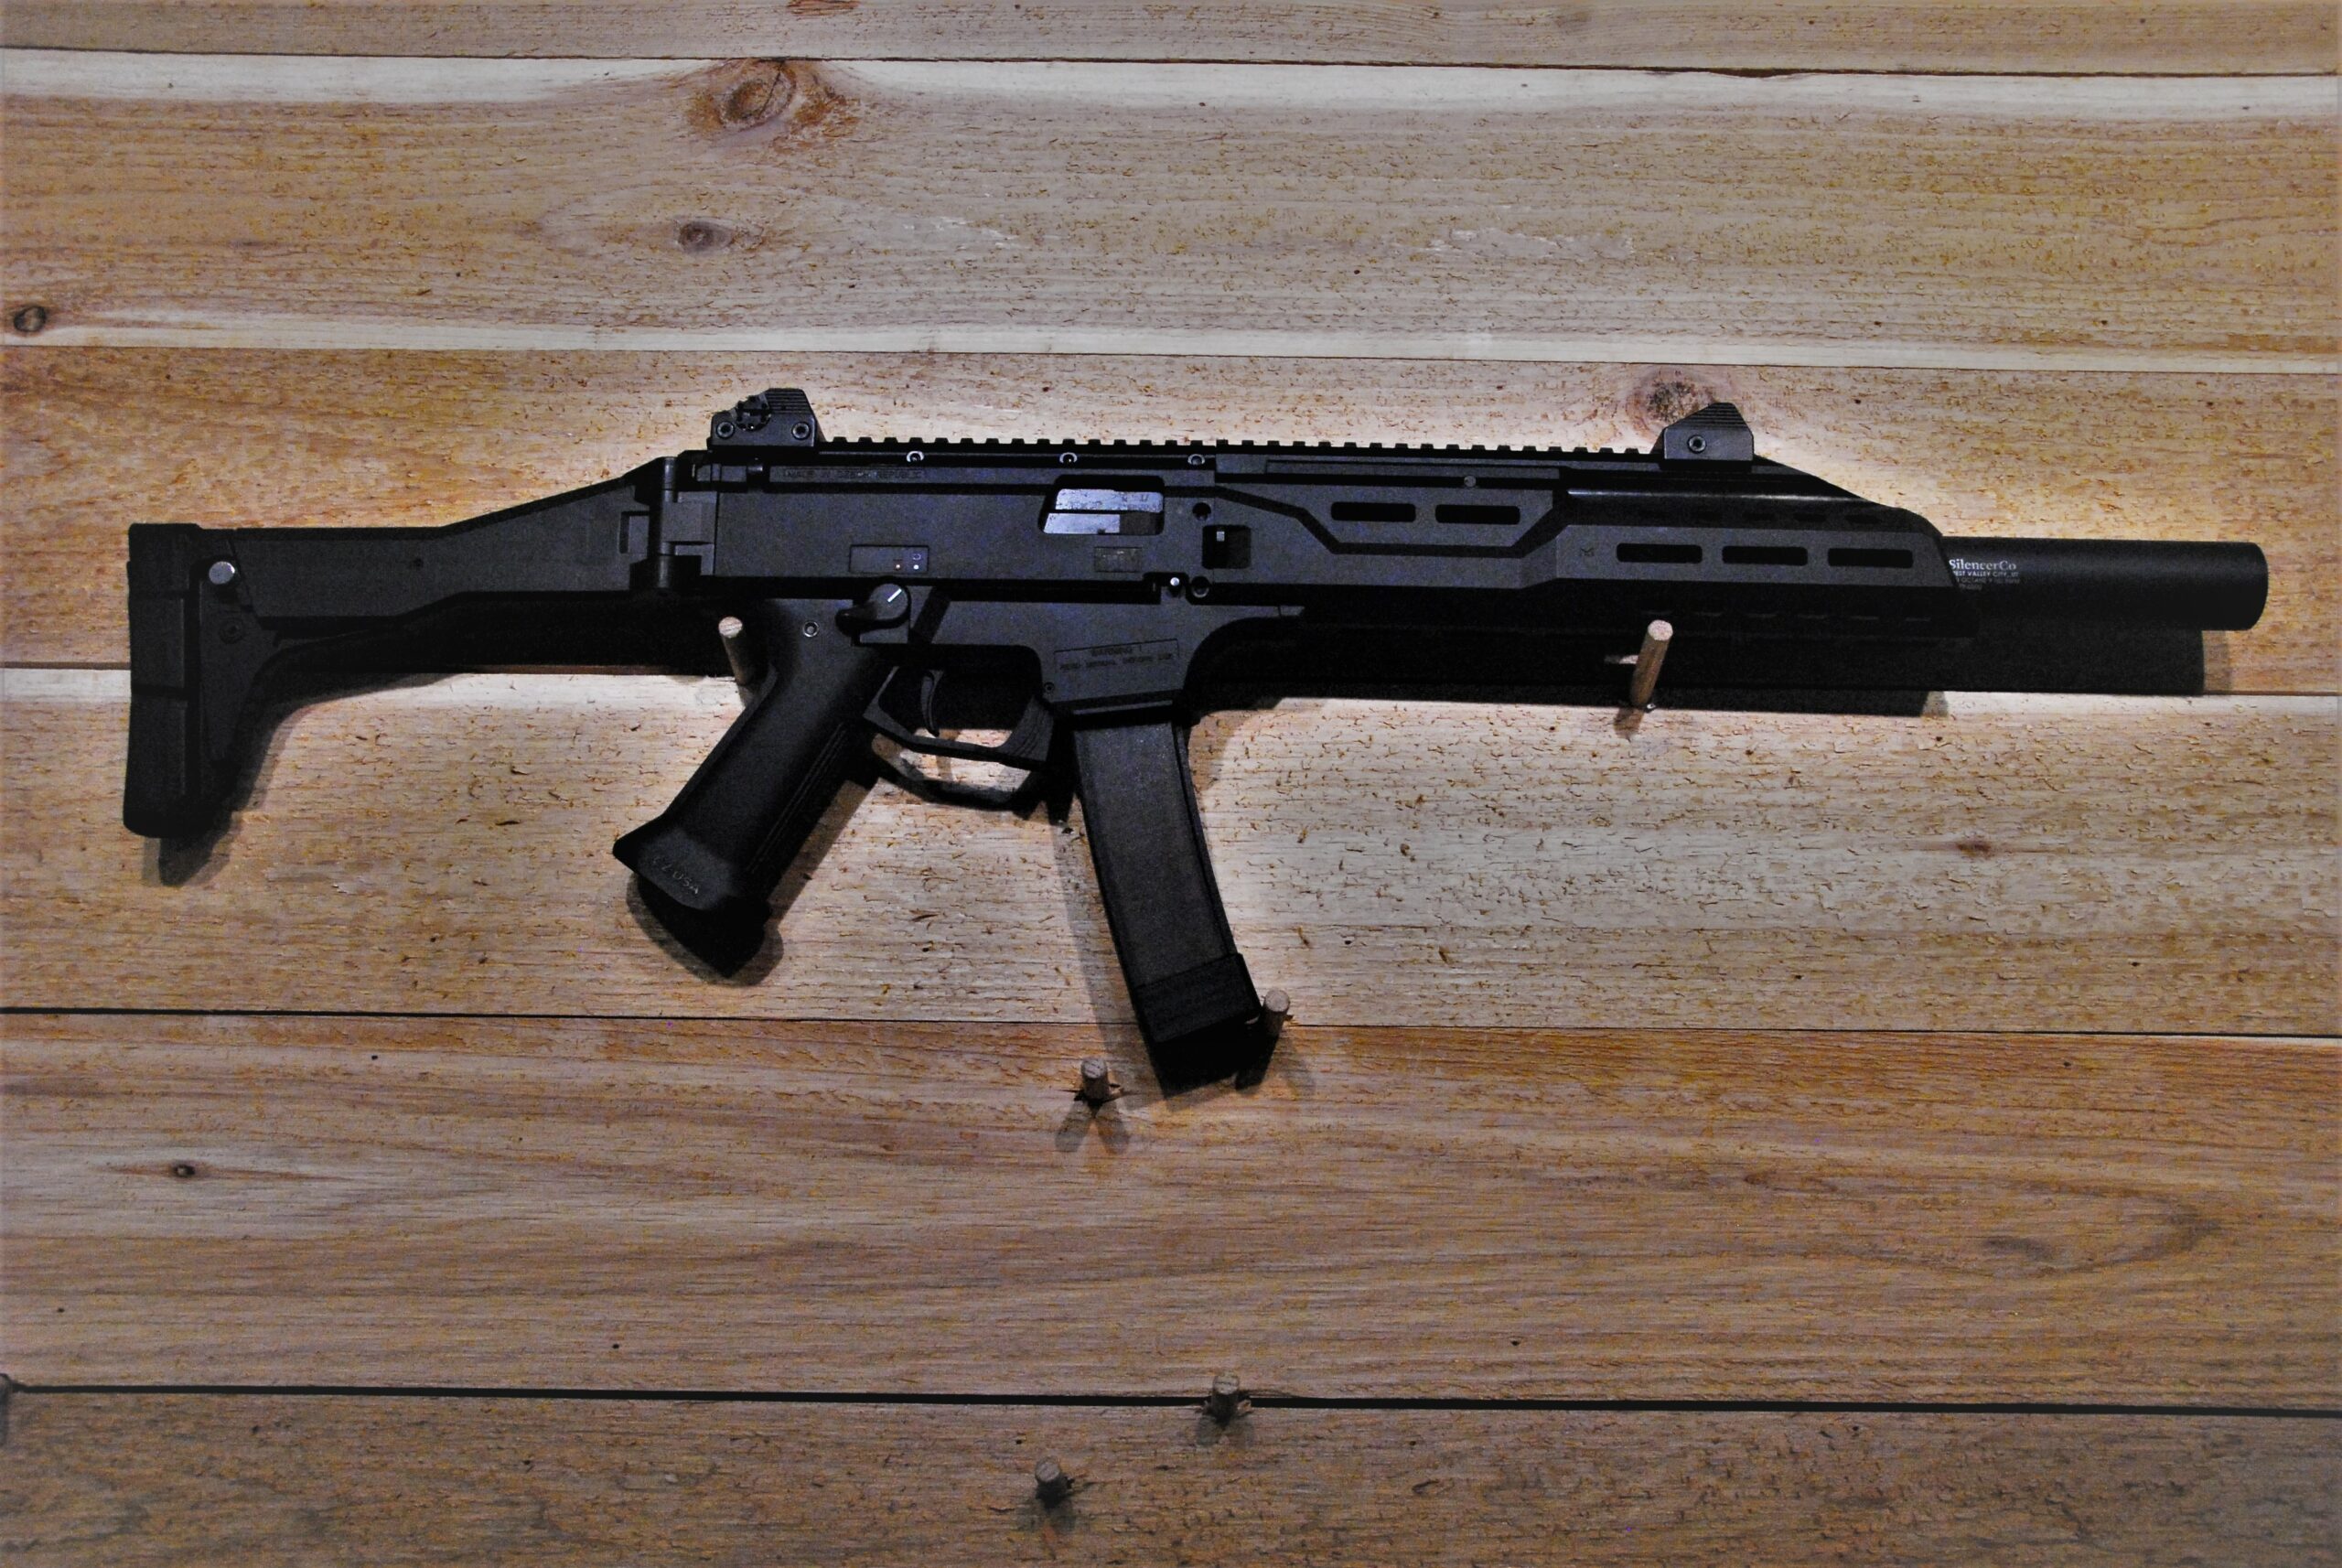 potd-suppressed-cz-skorpion-vz-61-the-firearm-blogthe-firearm-blog